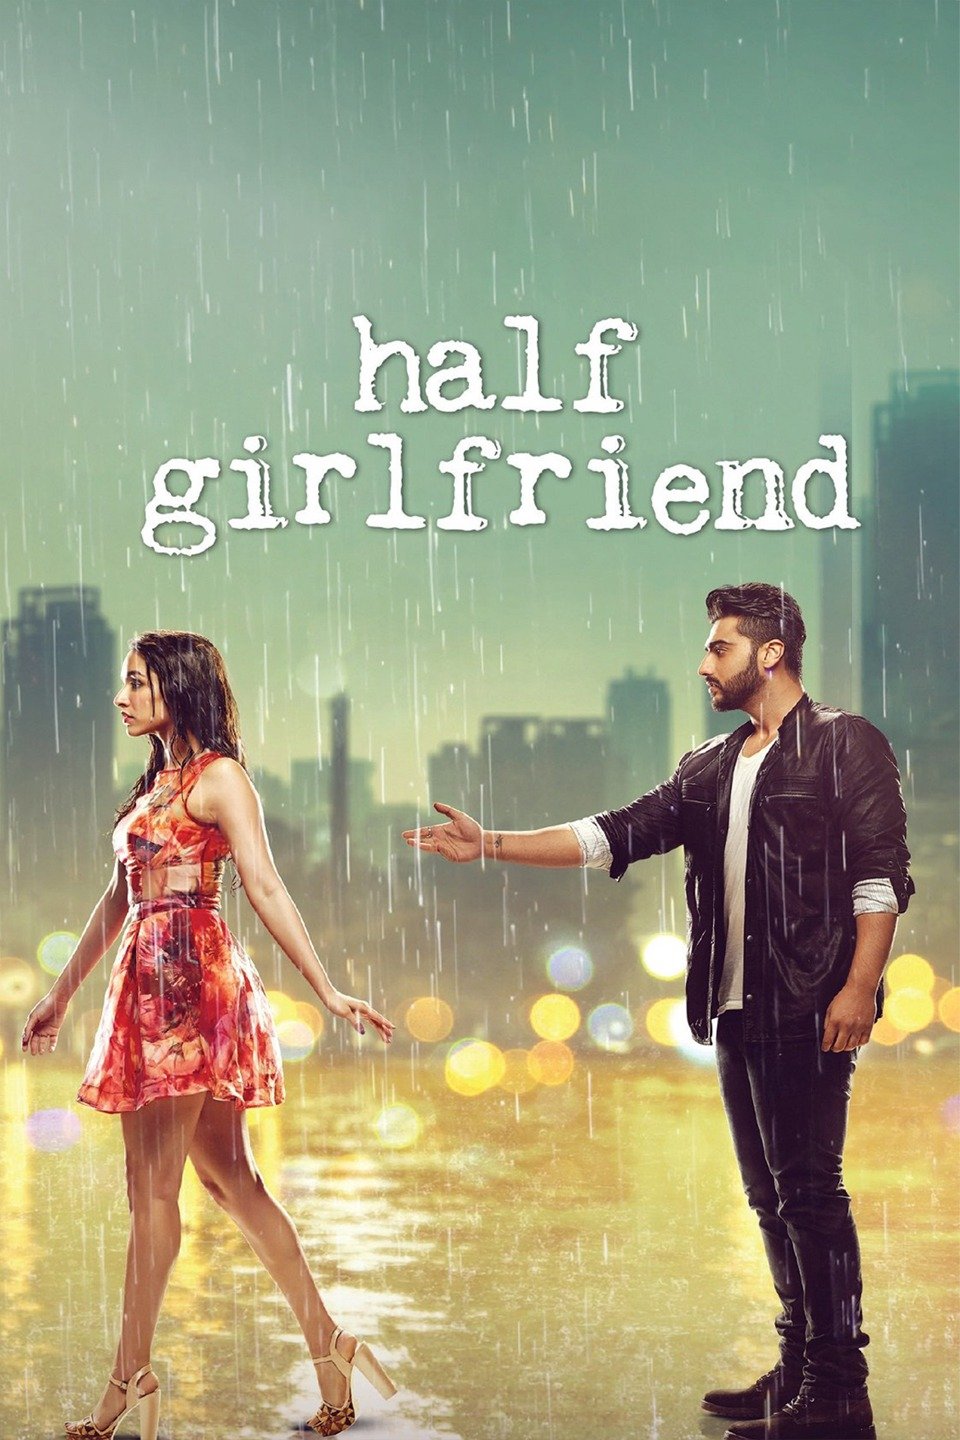 Half Girlfriend: Trailer 1 - Trailers & Videos - Rotten Tomatoes